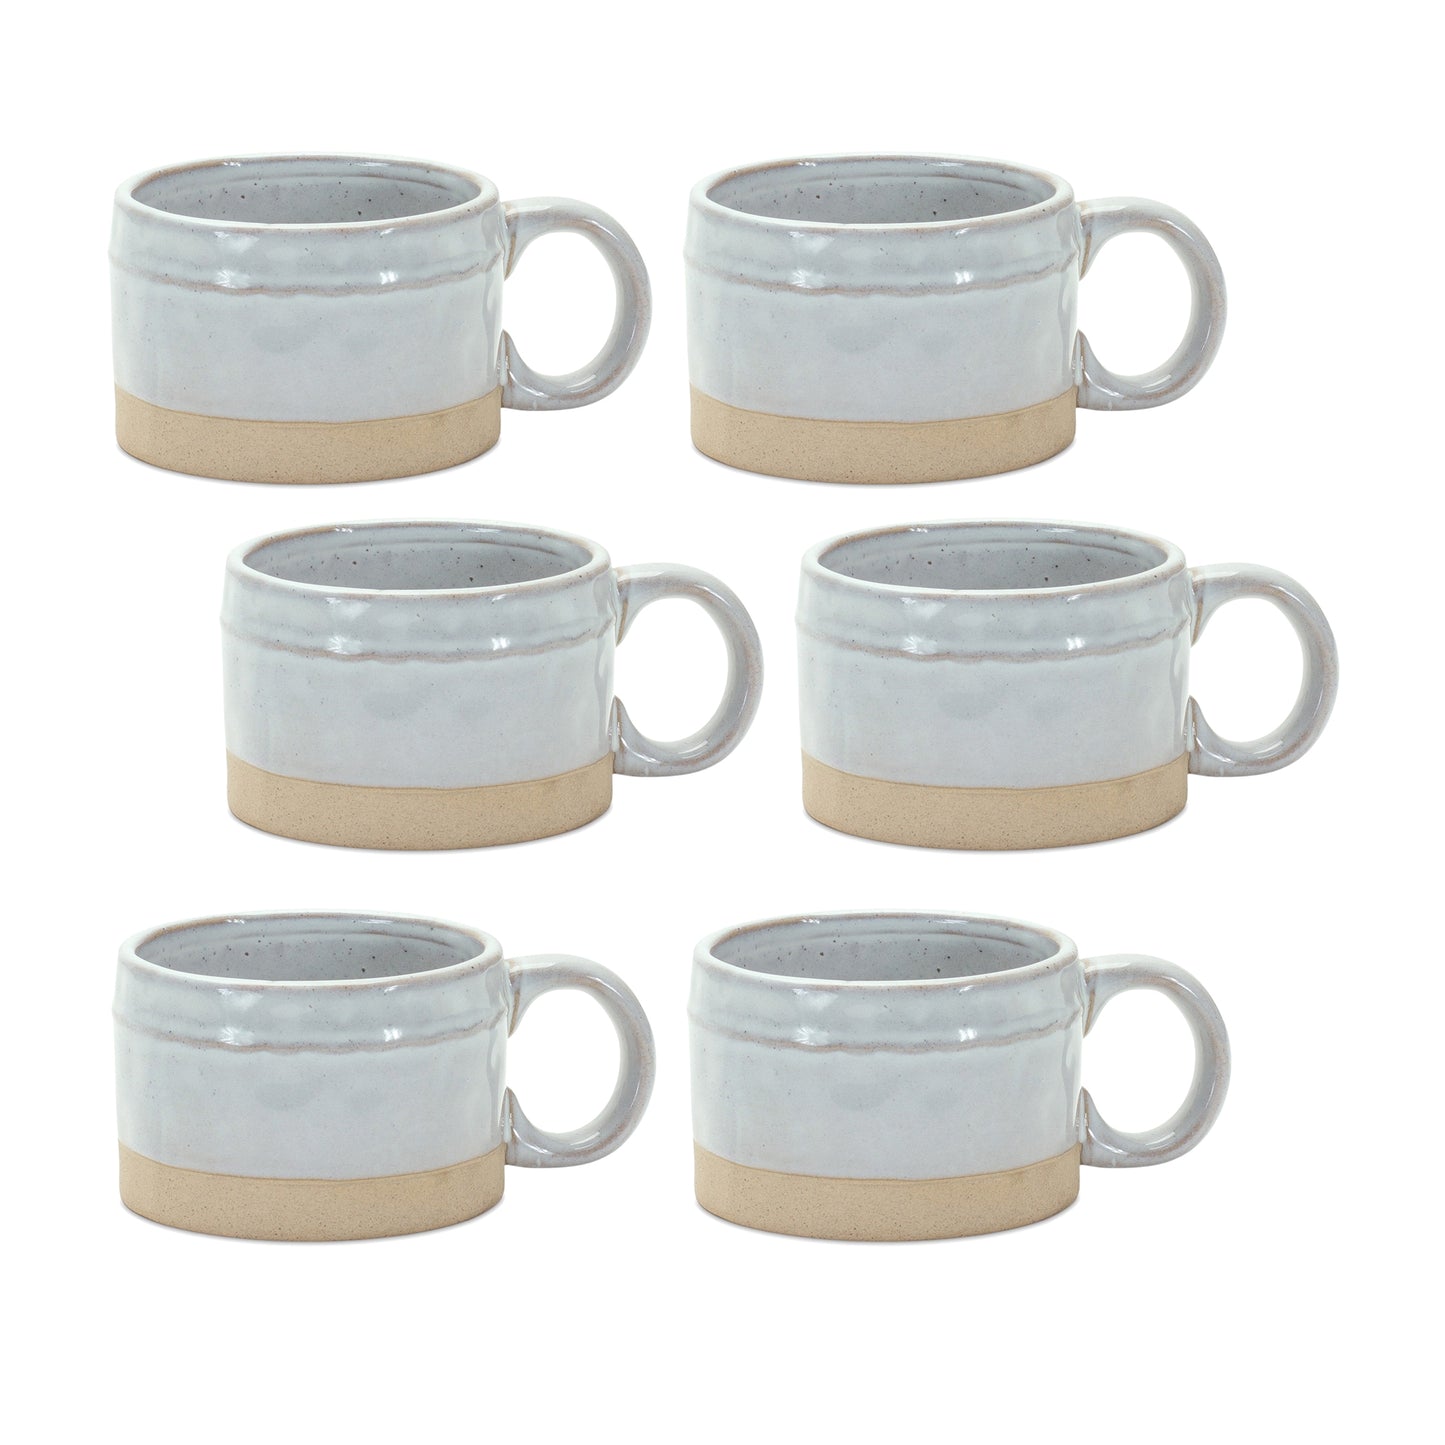 Rustic Porcelain Mug with Beige Accent (Set of 6)